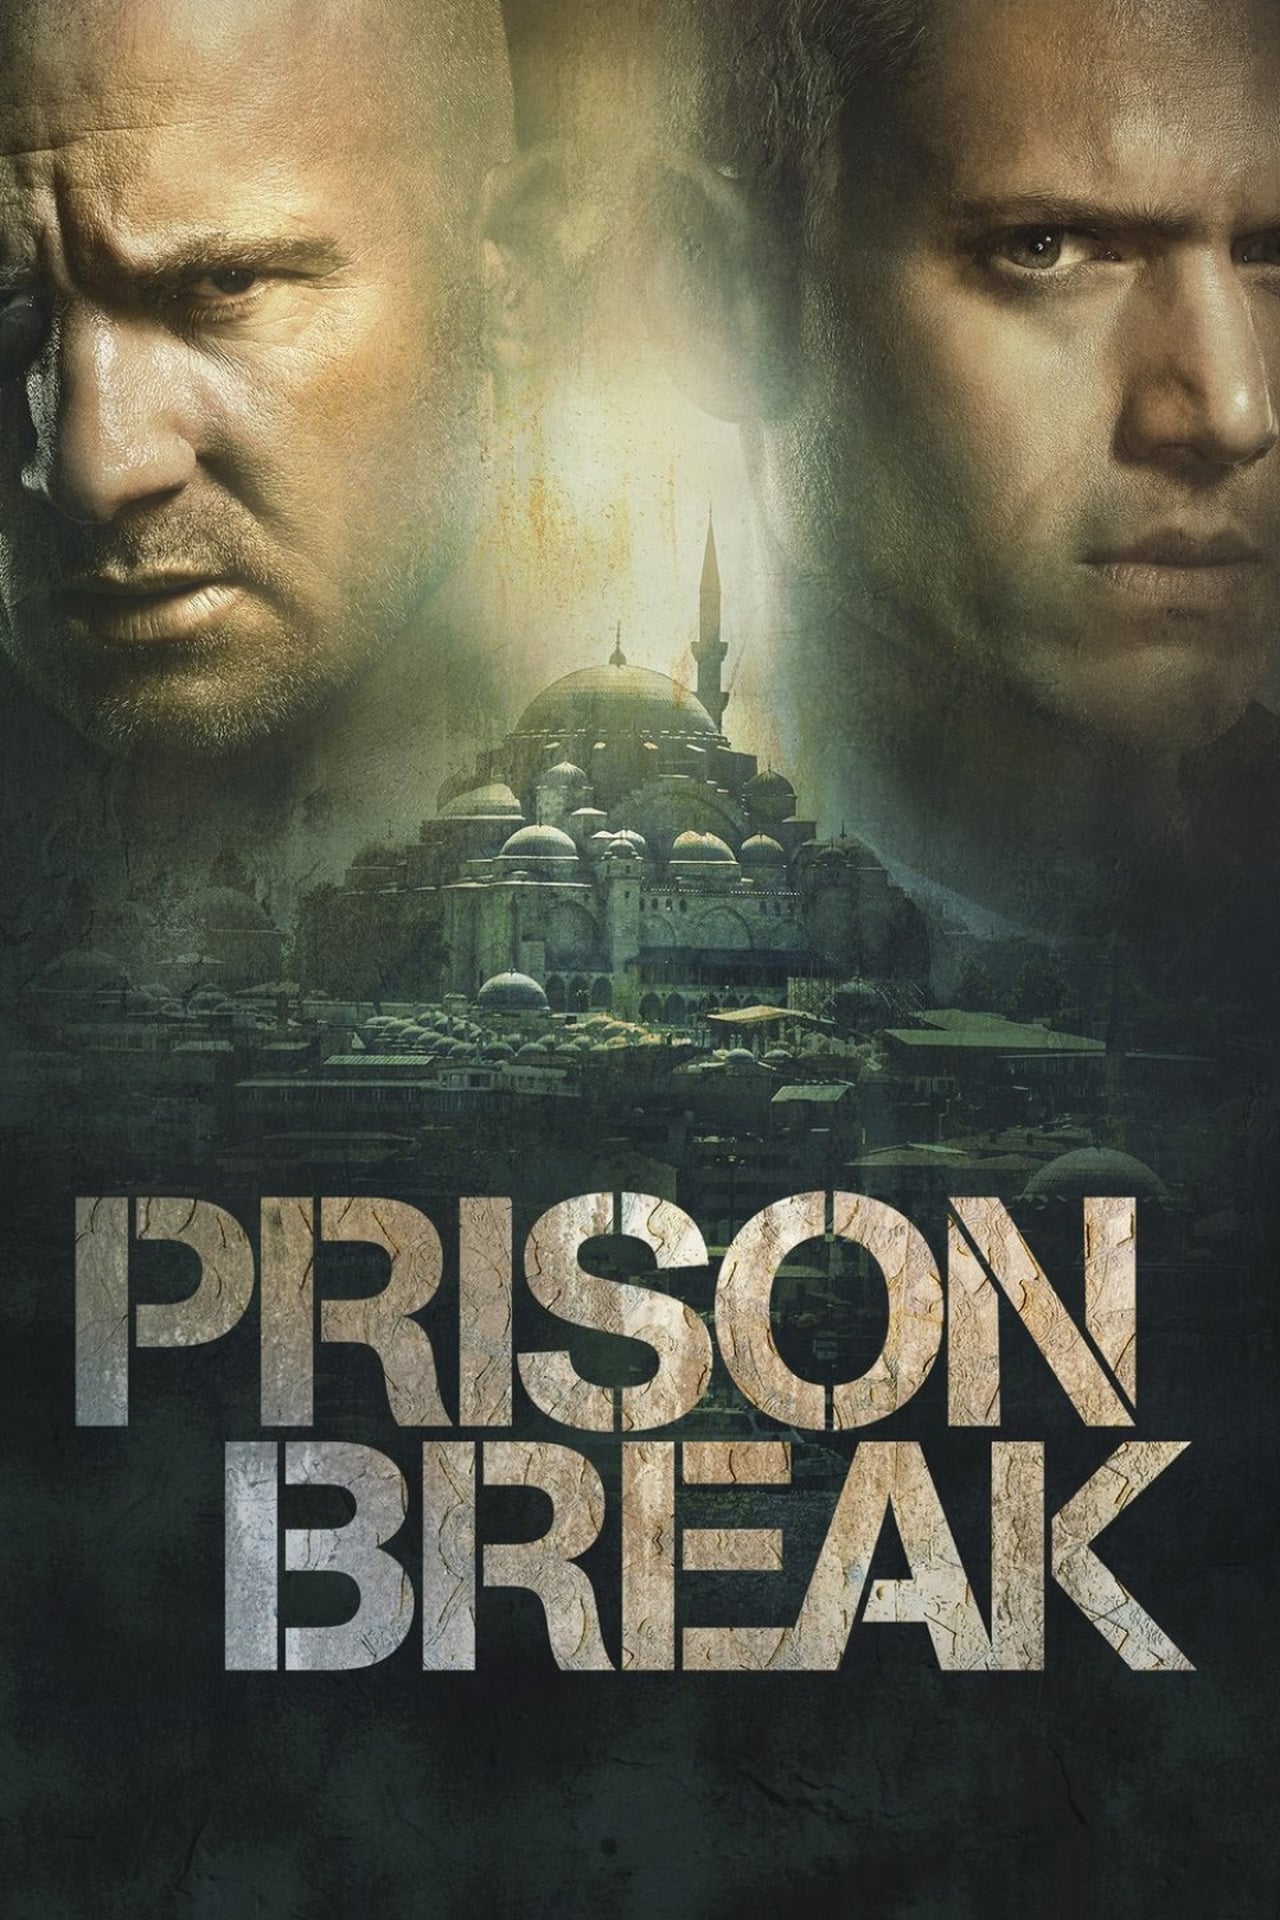 prison break season 1 episodes